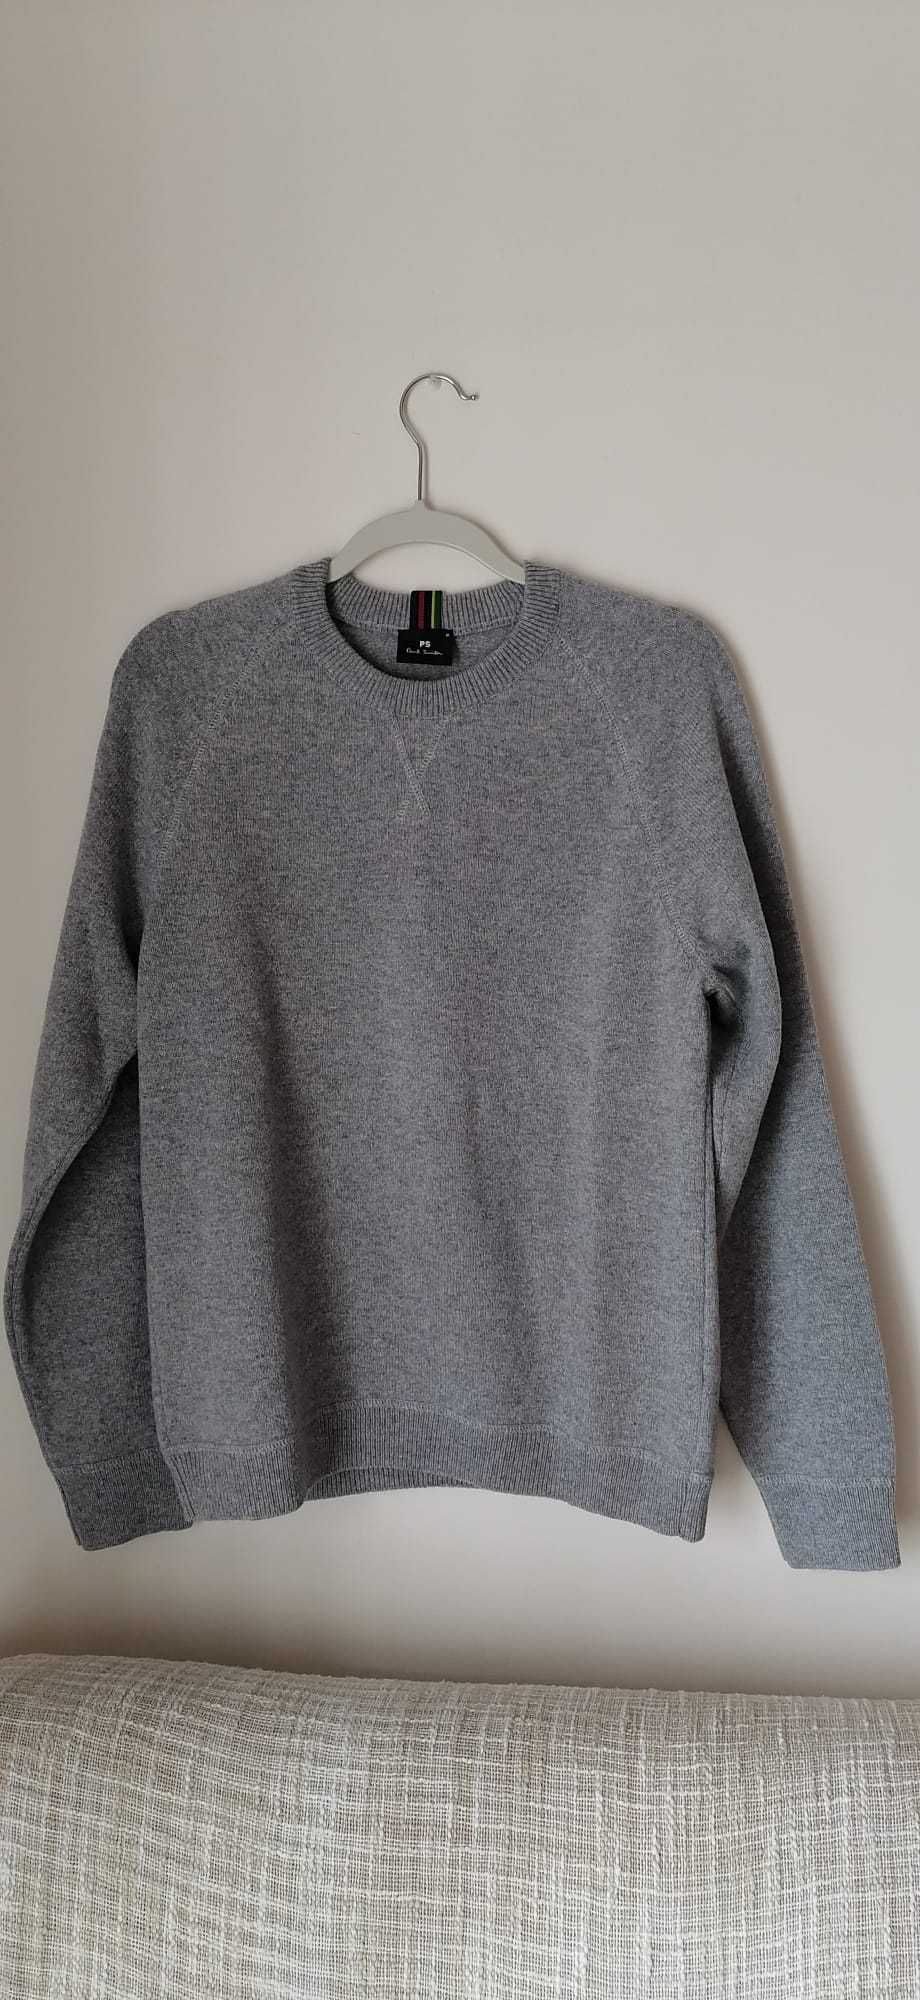 Paul Smith Merino Wool Grey Sweater